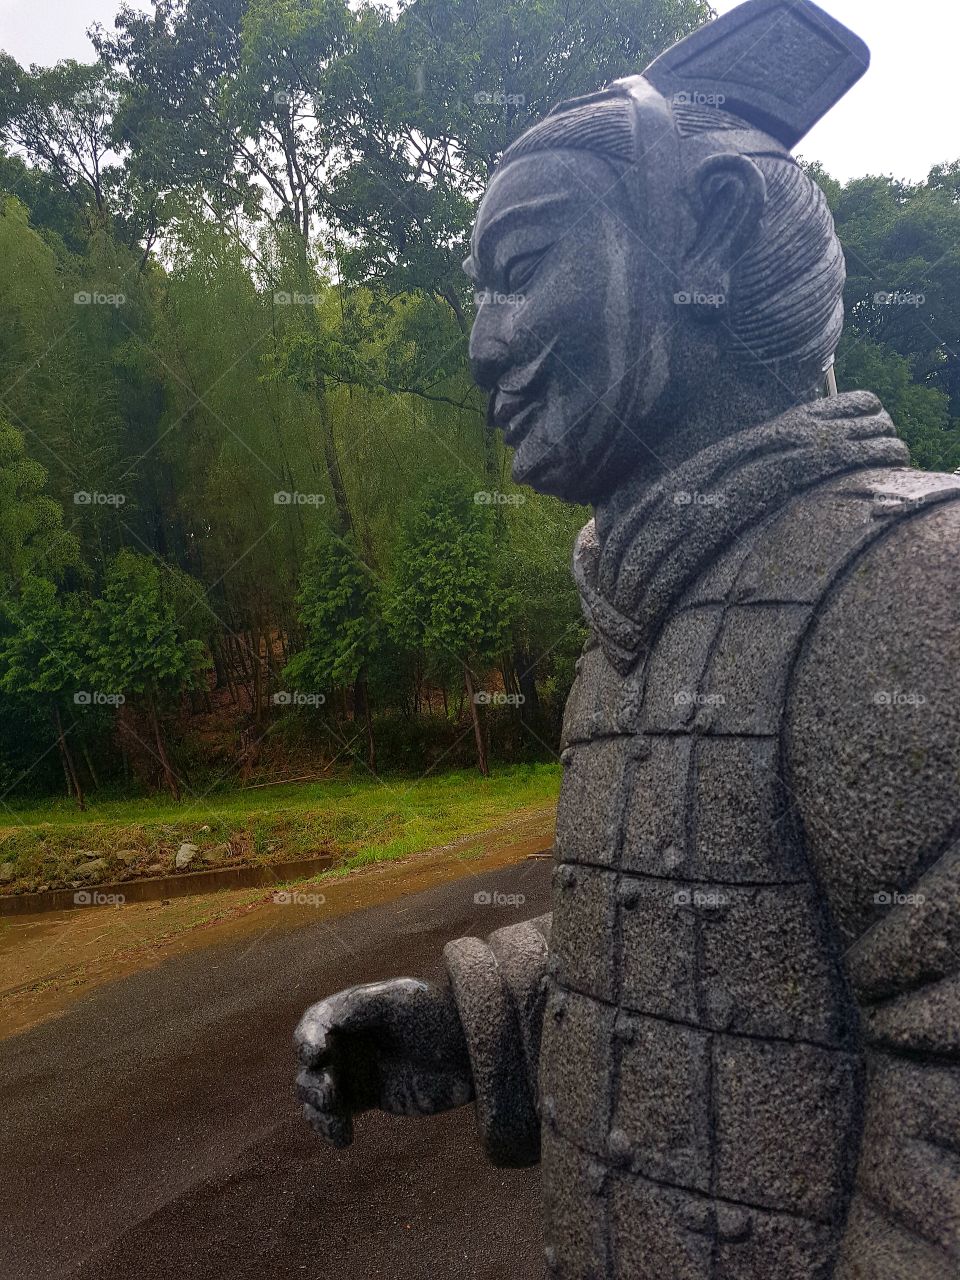 A recreation of a terracotta warrior in Himeji Japan